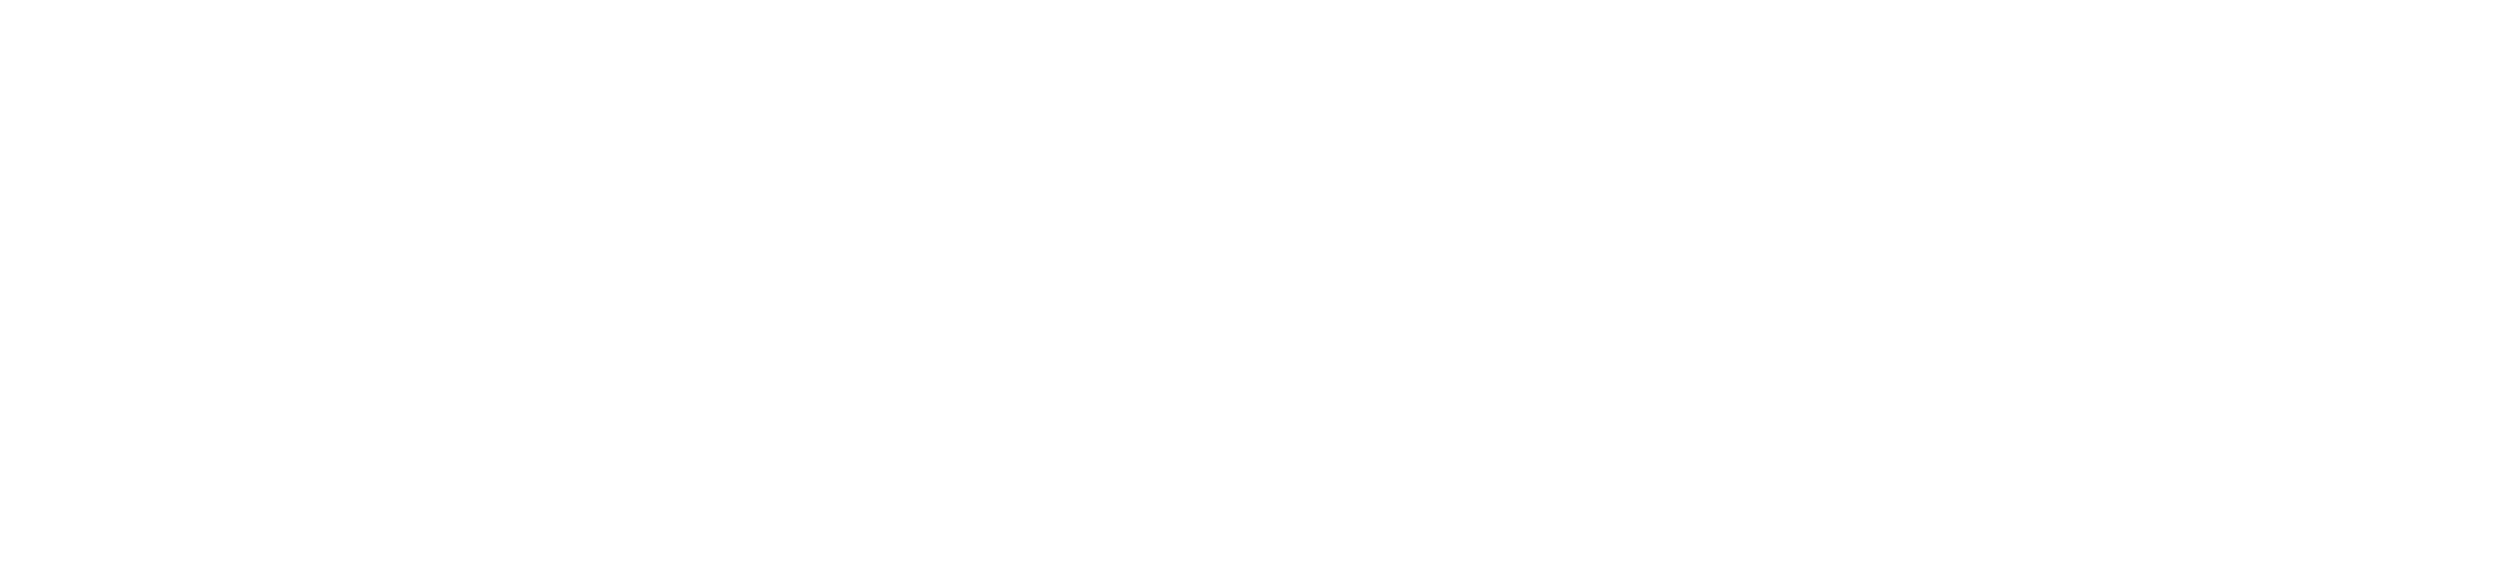 Guitar Masters Tour